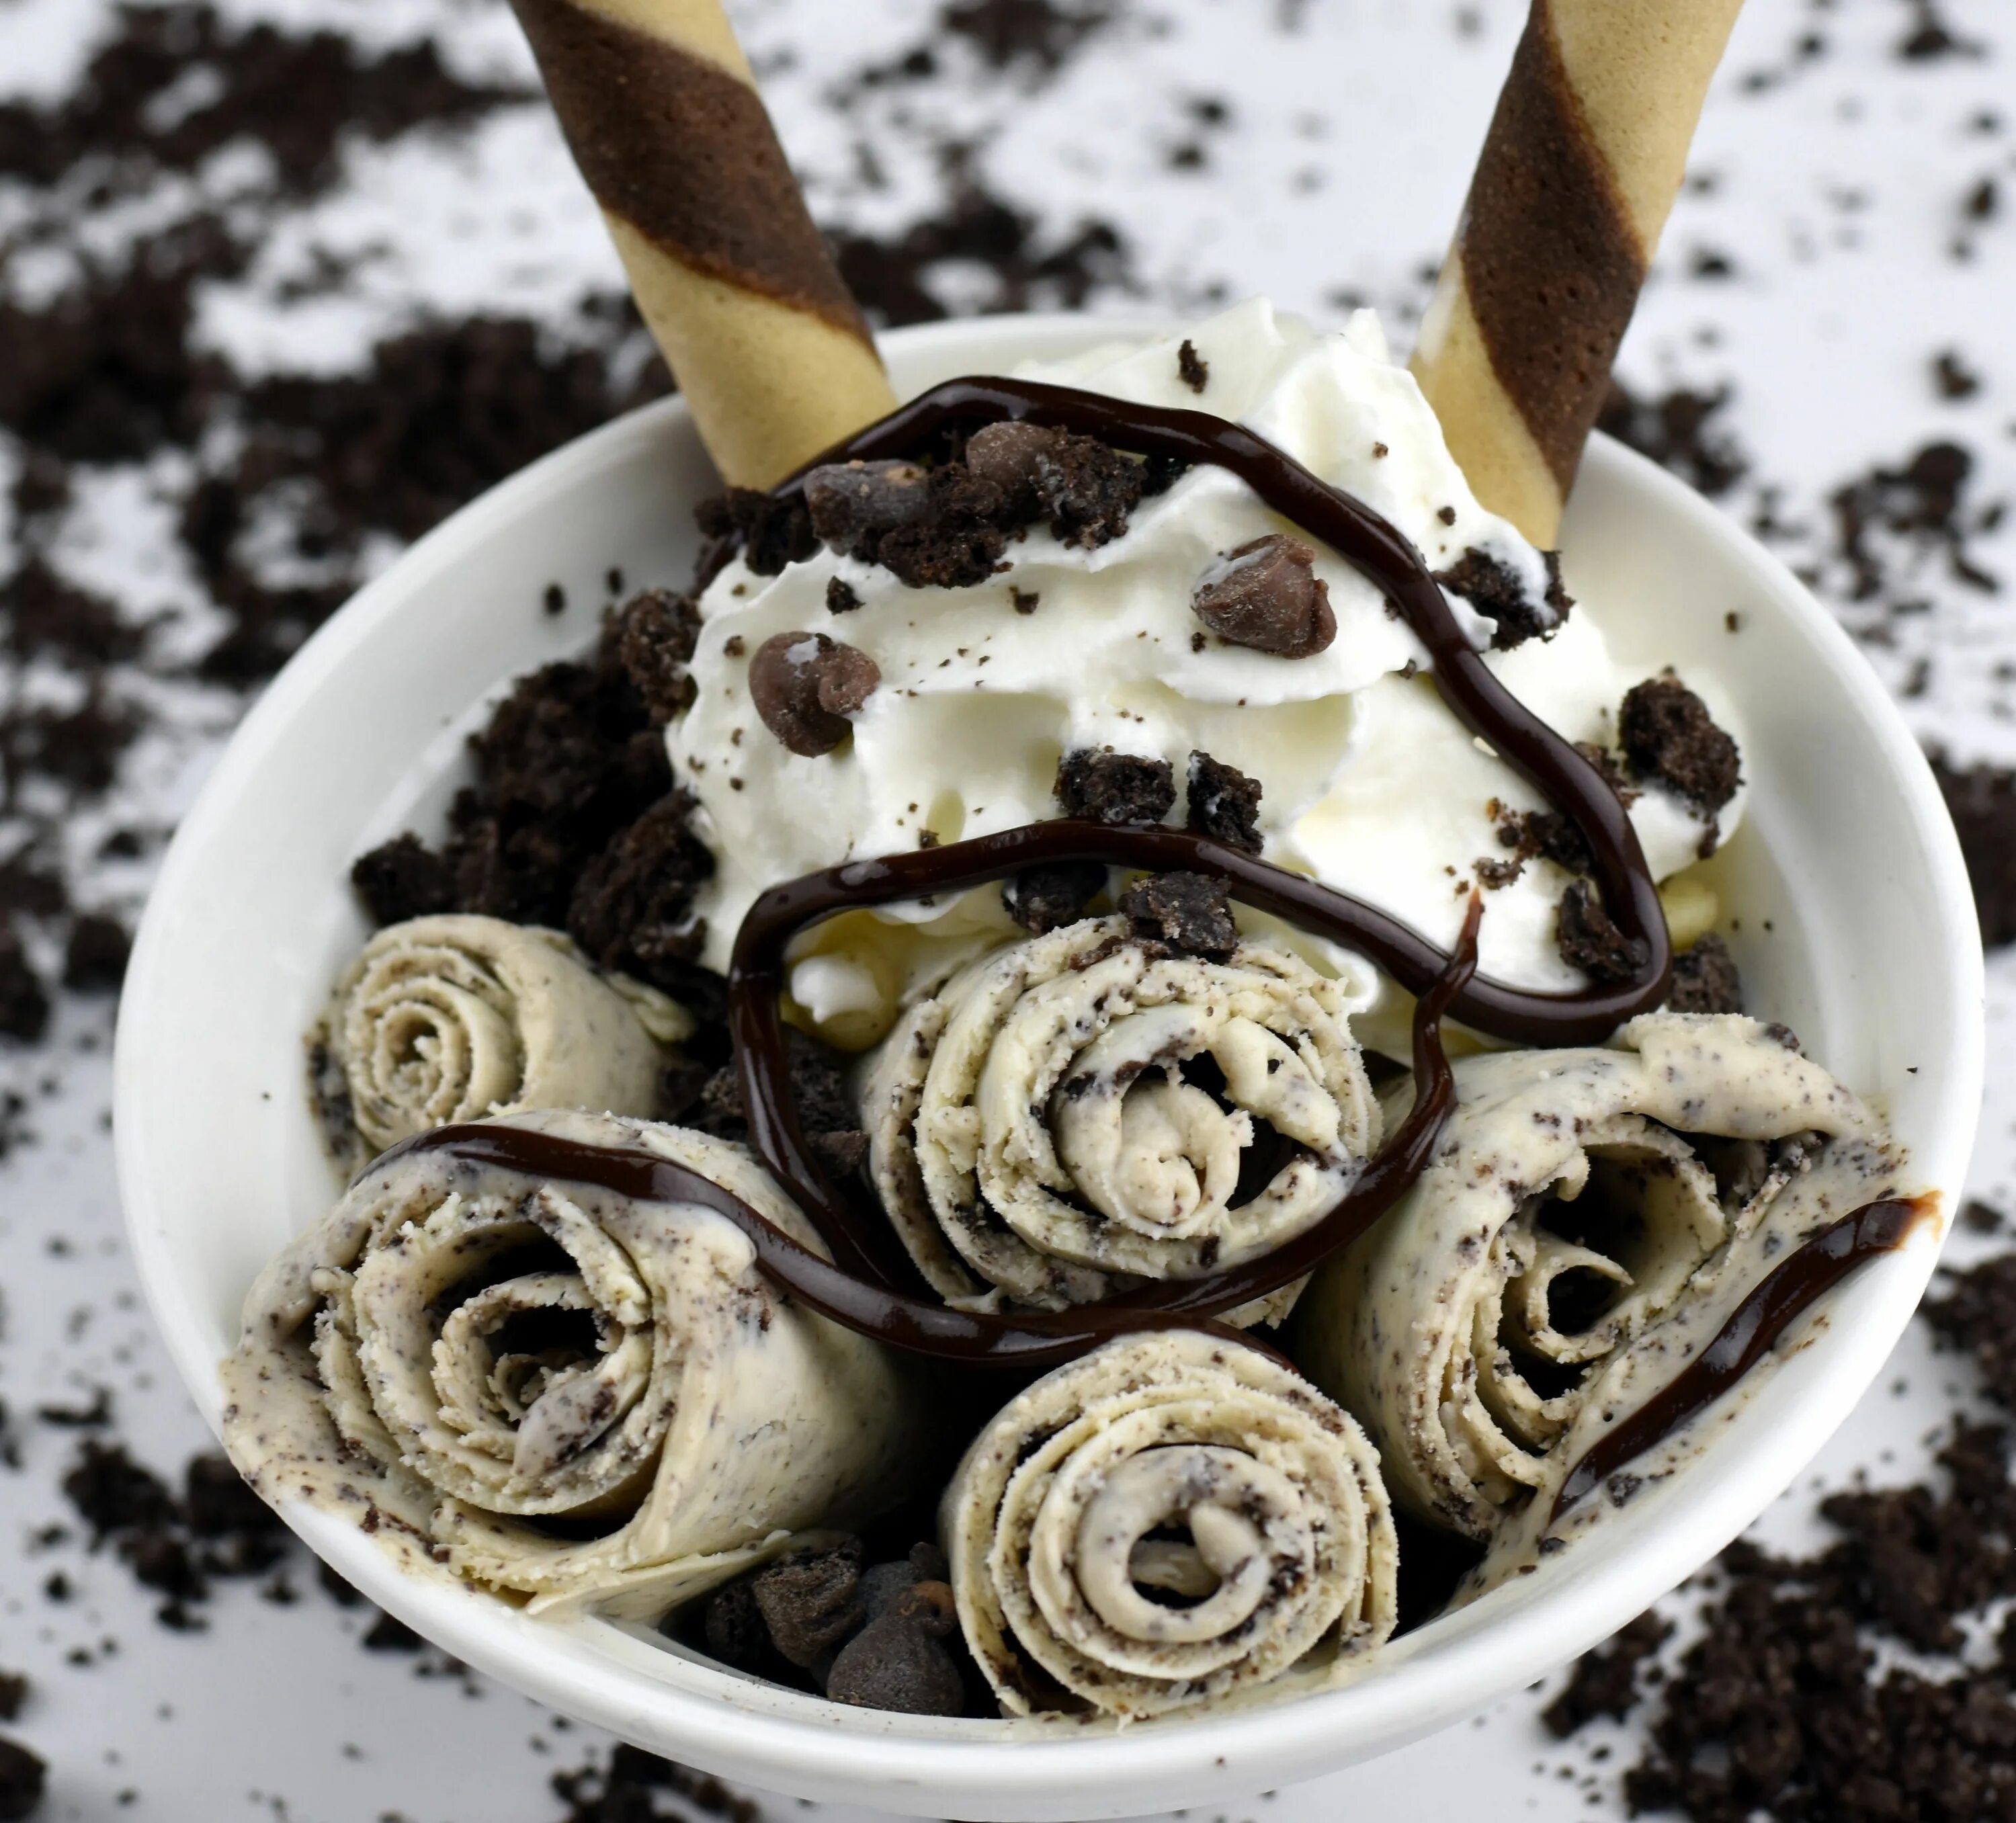 Oreo Ice Cream Roll. Жареное мороженое Орео. Тайское мороженое. Ice Cream Roll тайское мороженое.